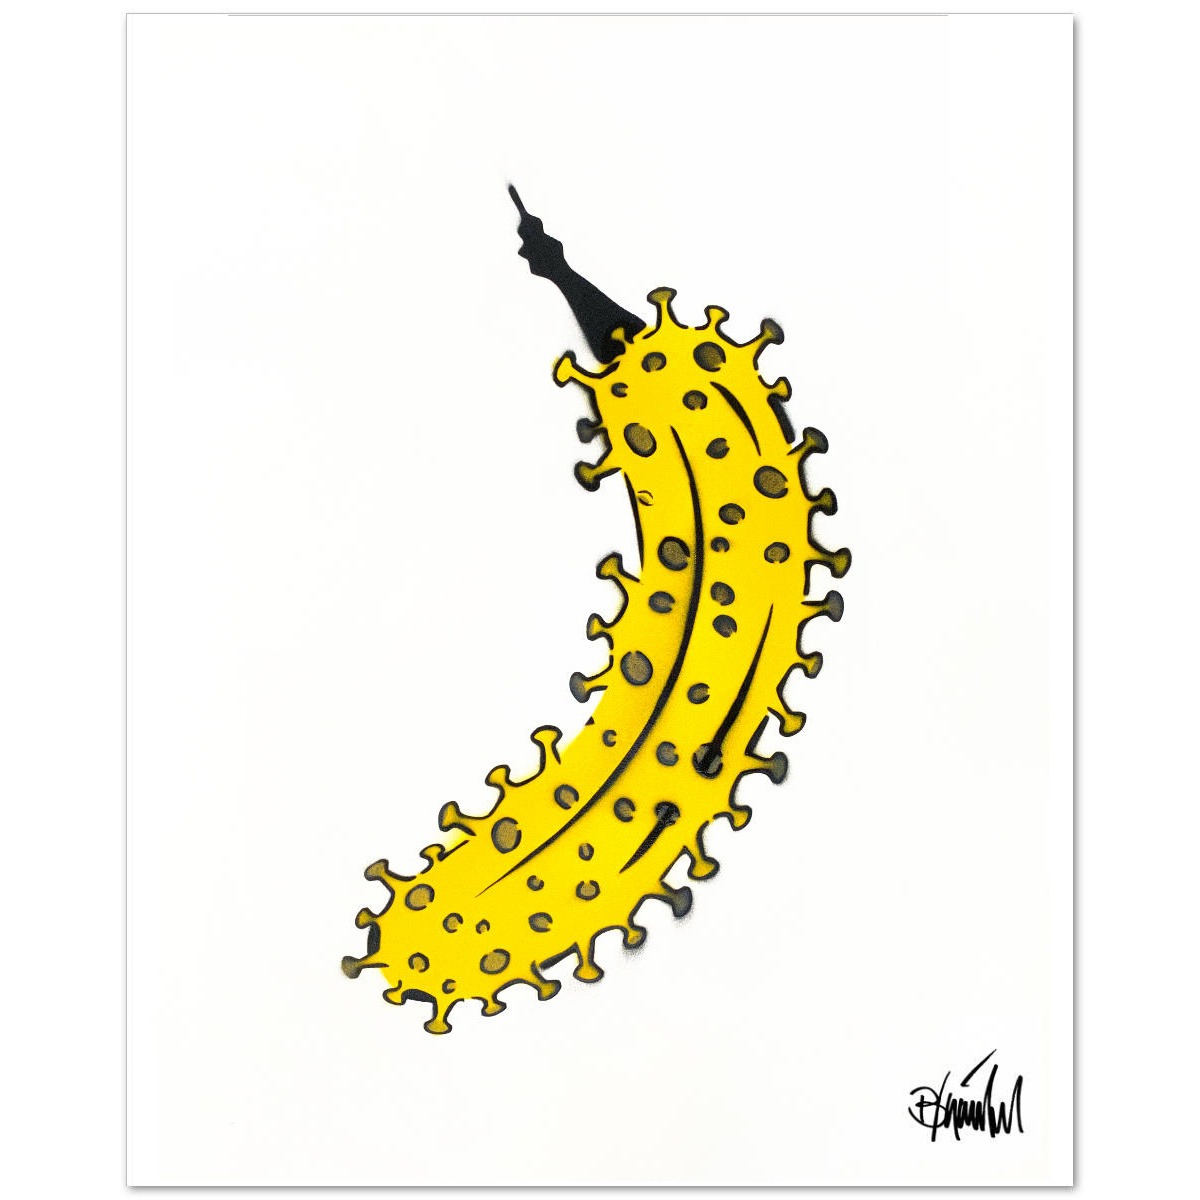 Corona-Banane von Thomas Baumgärtel